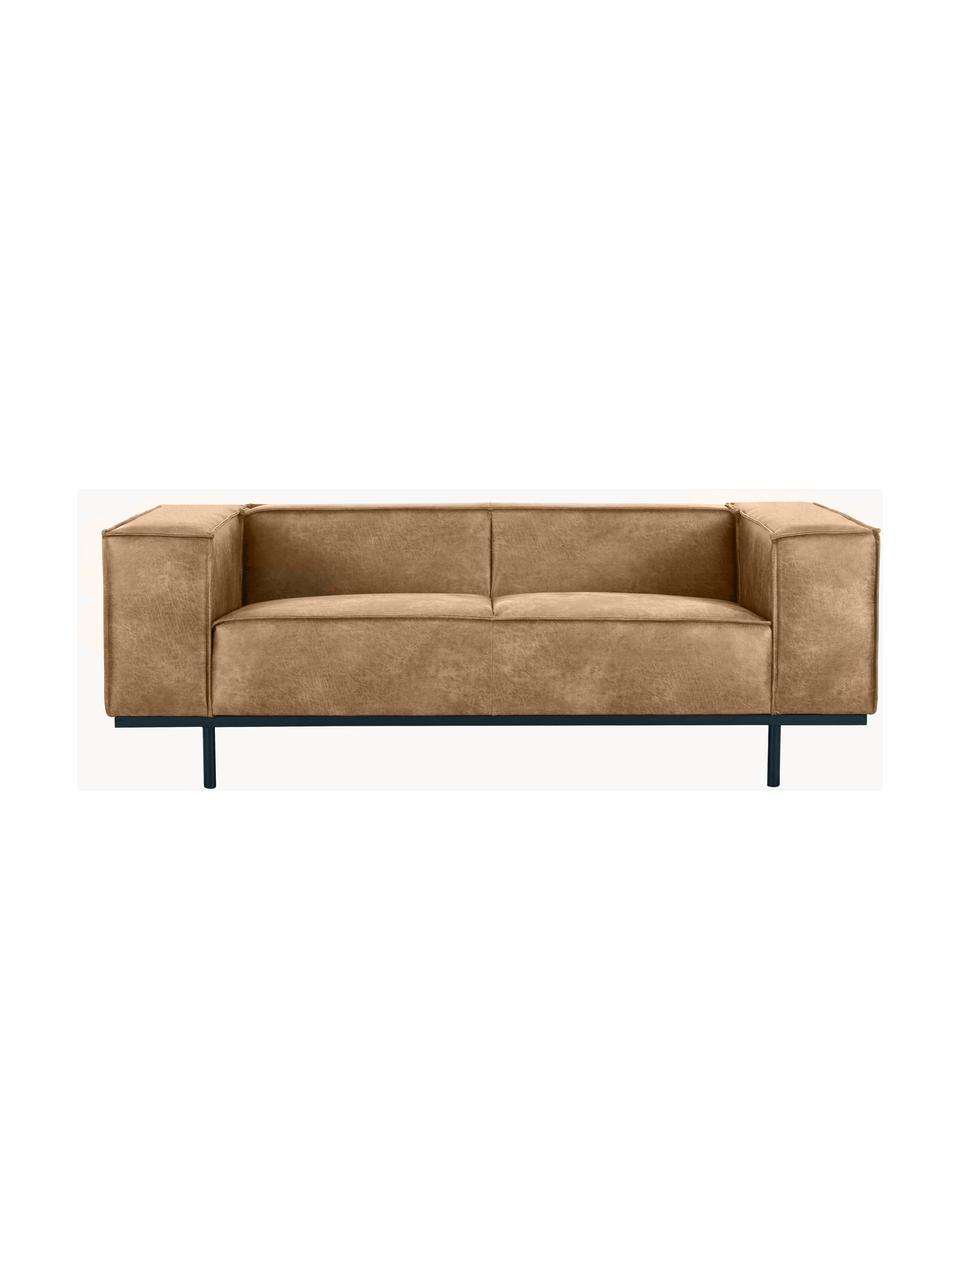 Leder-Sofa Abigail (2-Sitzer) in Braungrau mit Metall-Füßen, Bezug: Lederfaserstoff (70% Lede, Beine: Metall, lackiert, Leder Hellbraun, B 190 x T 95 cm